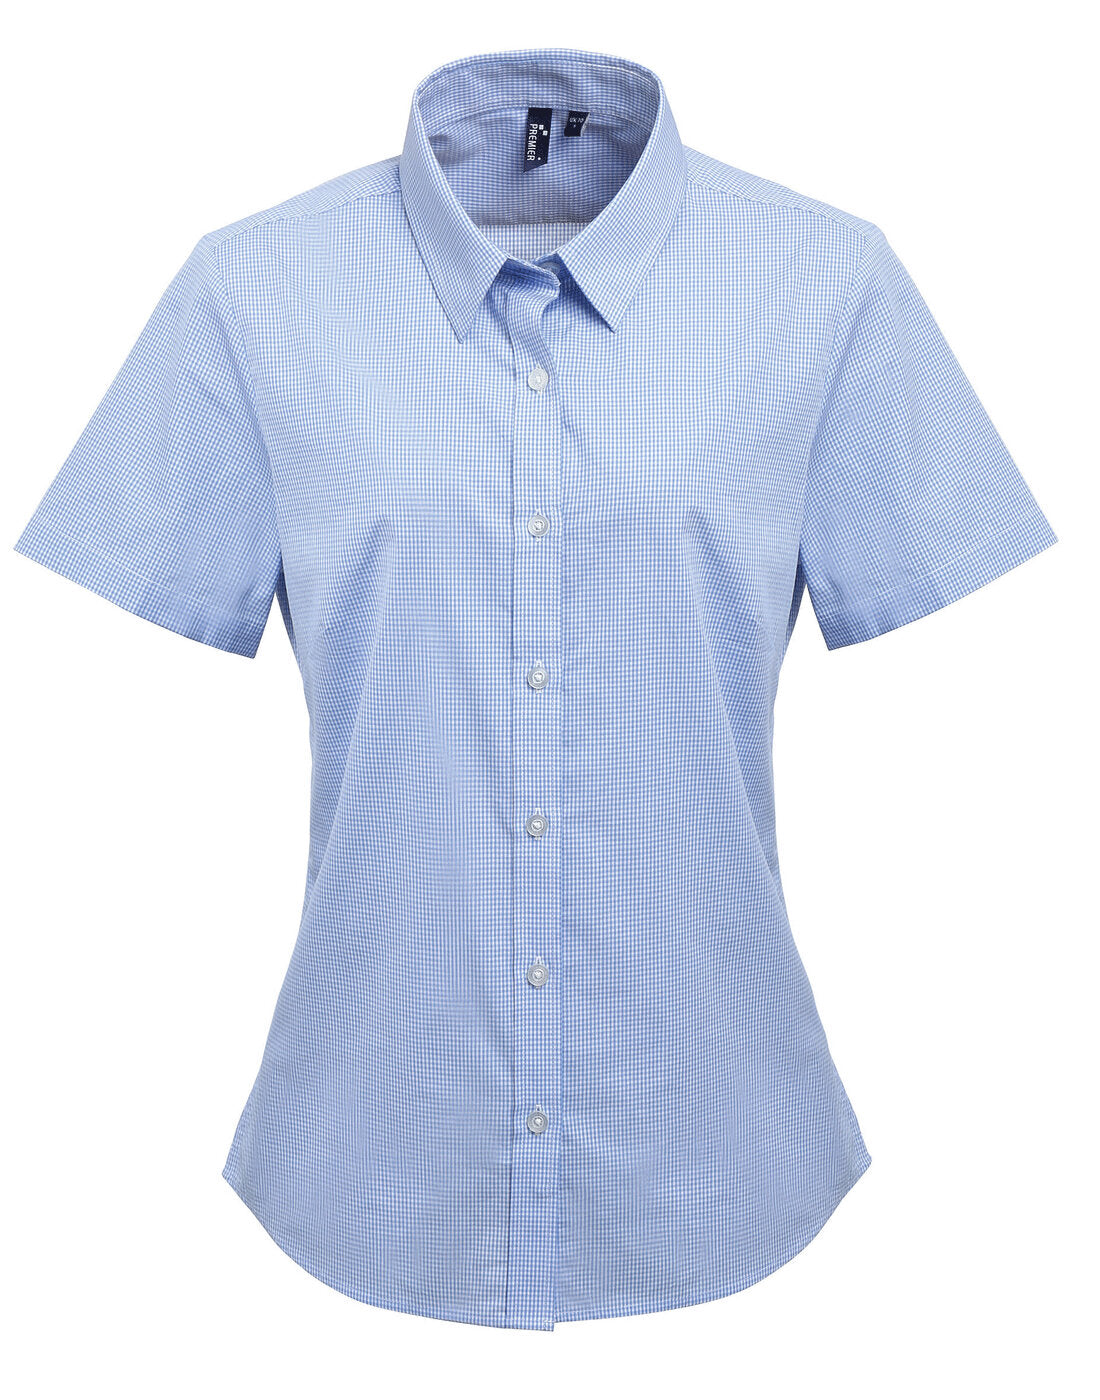 Premier Women's Short Sleeve Gingham Microcheck Shirt